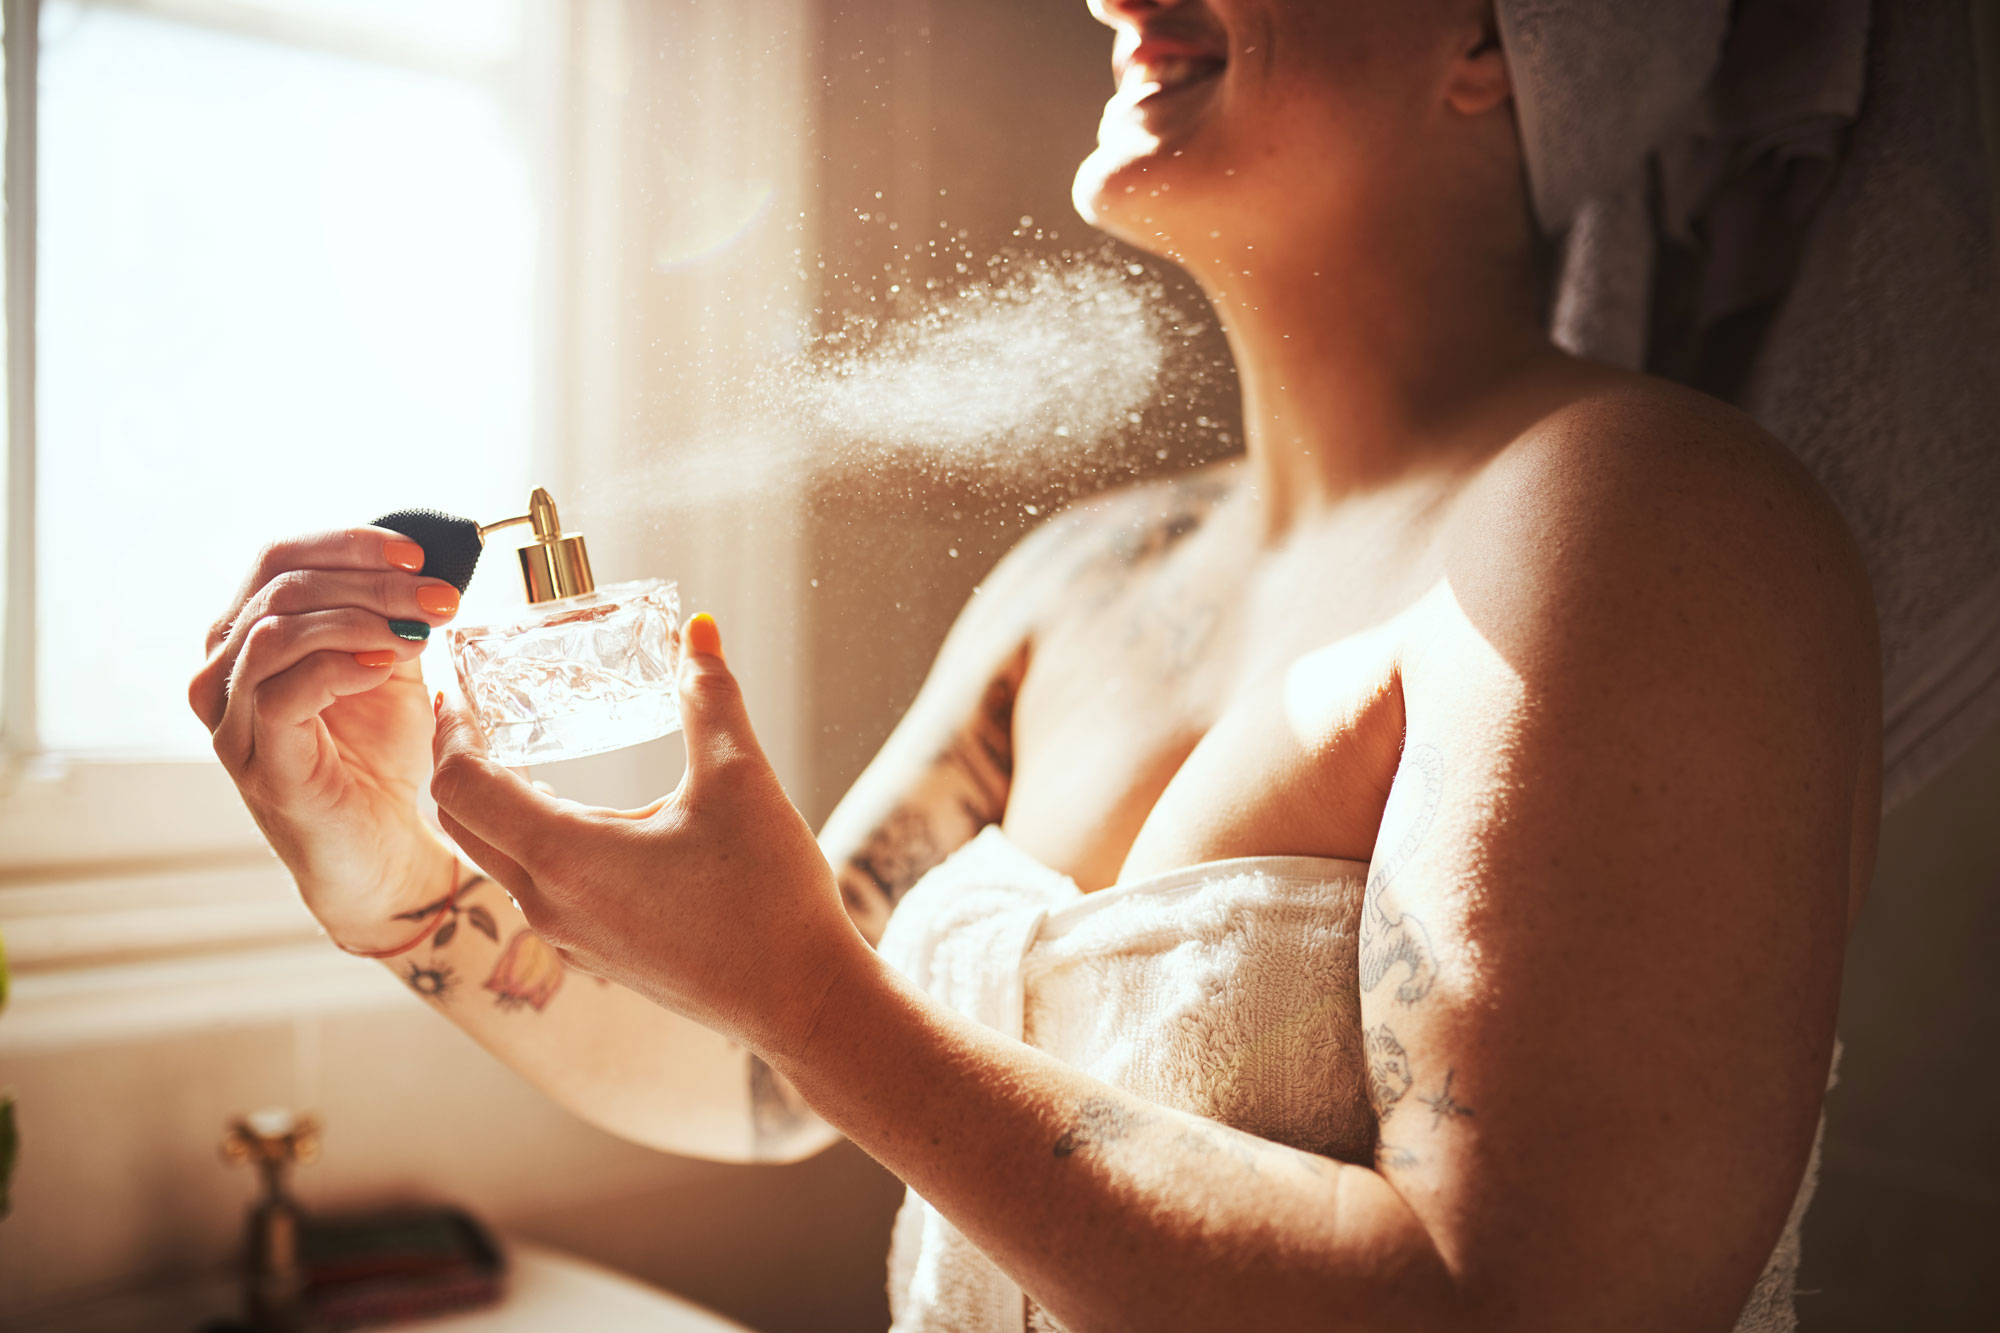 woman spraying perfume after showering